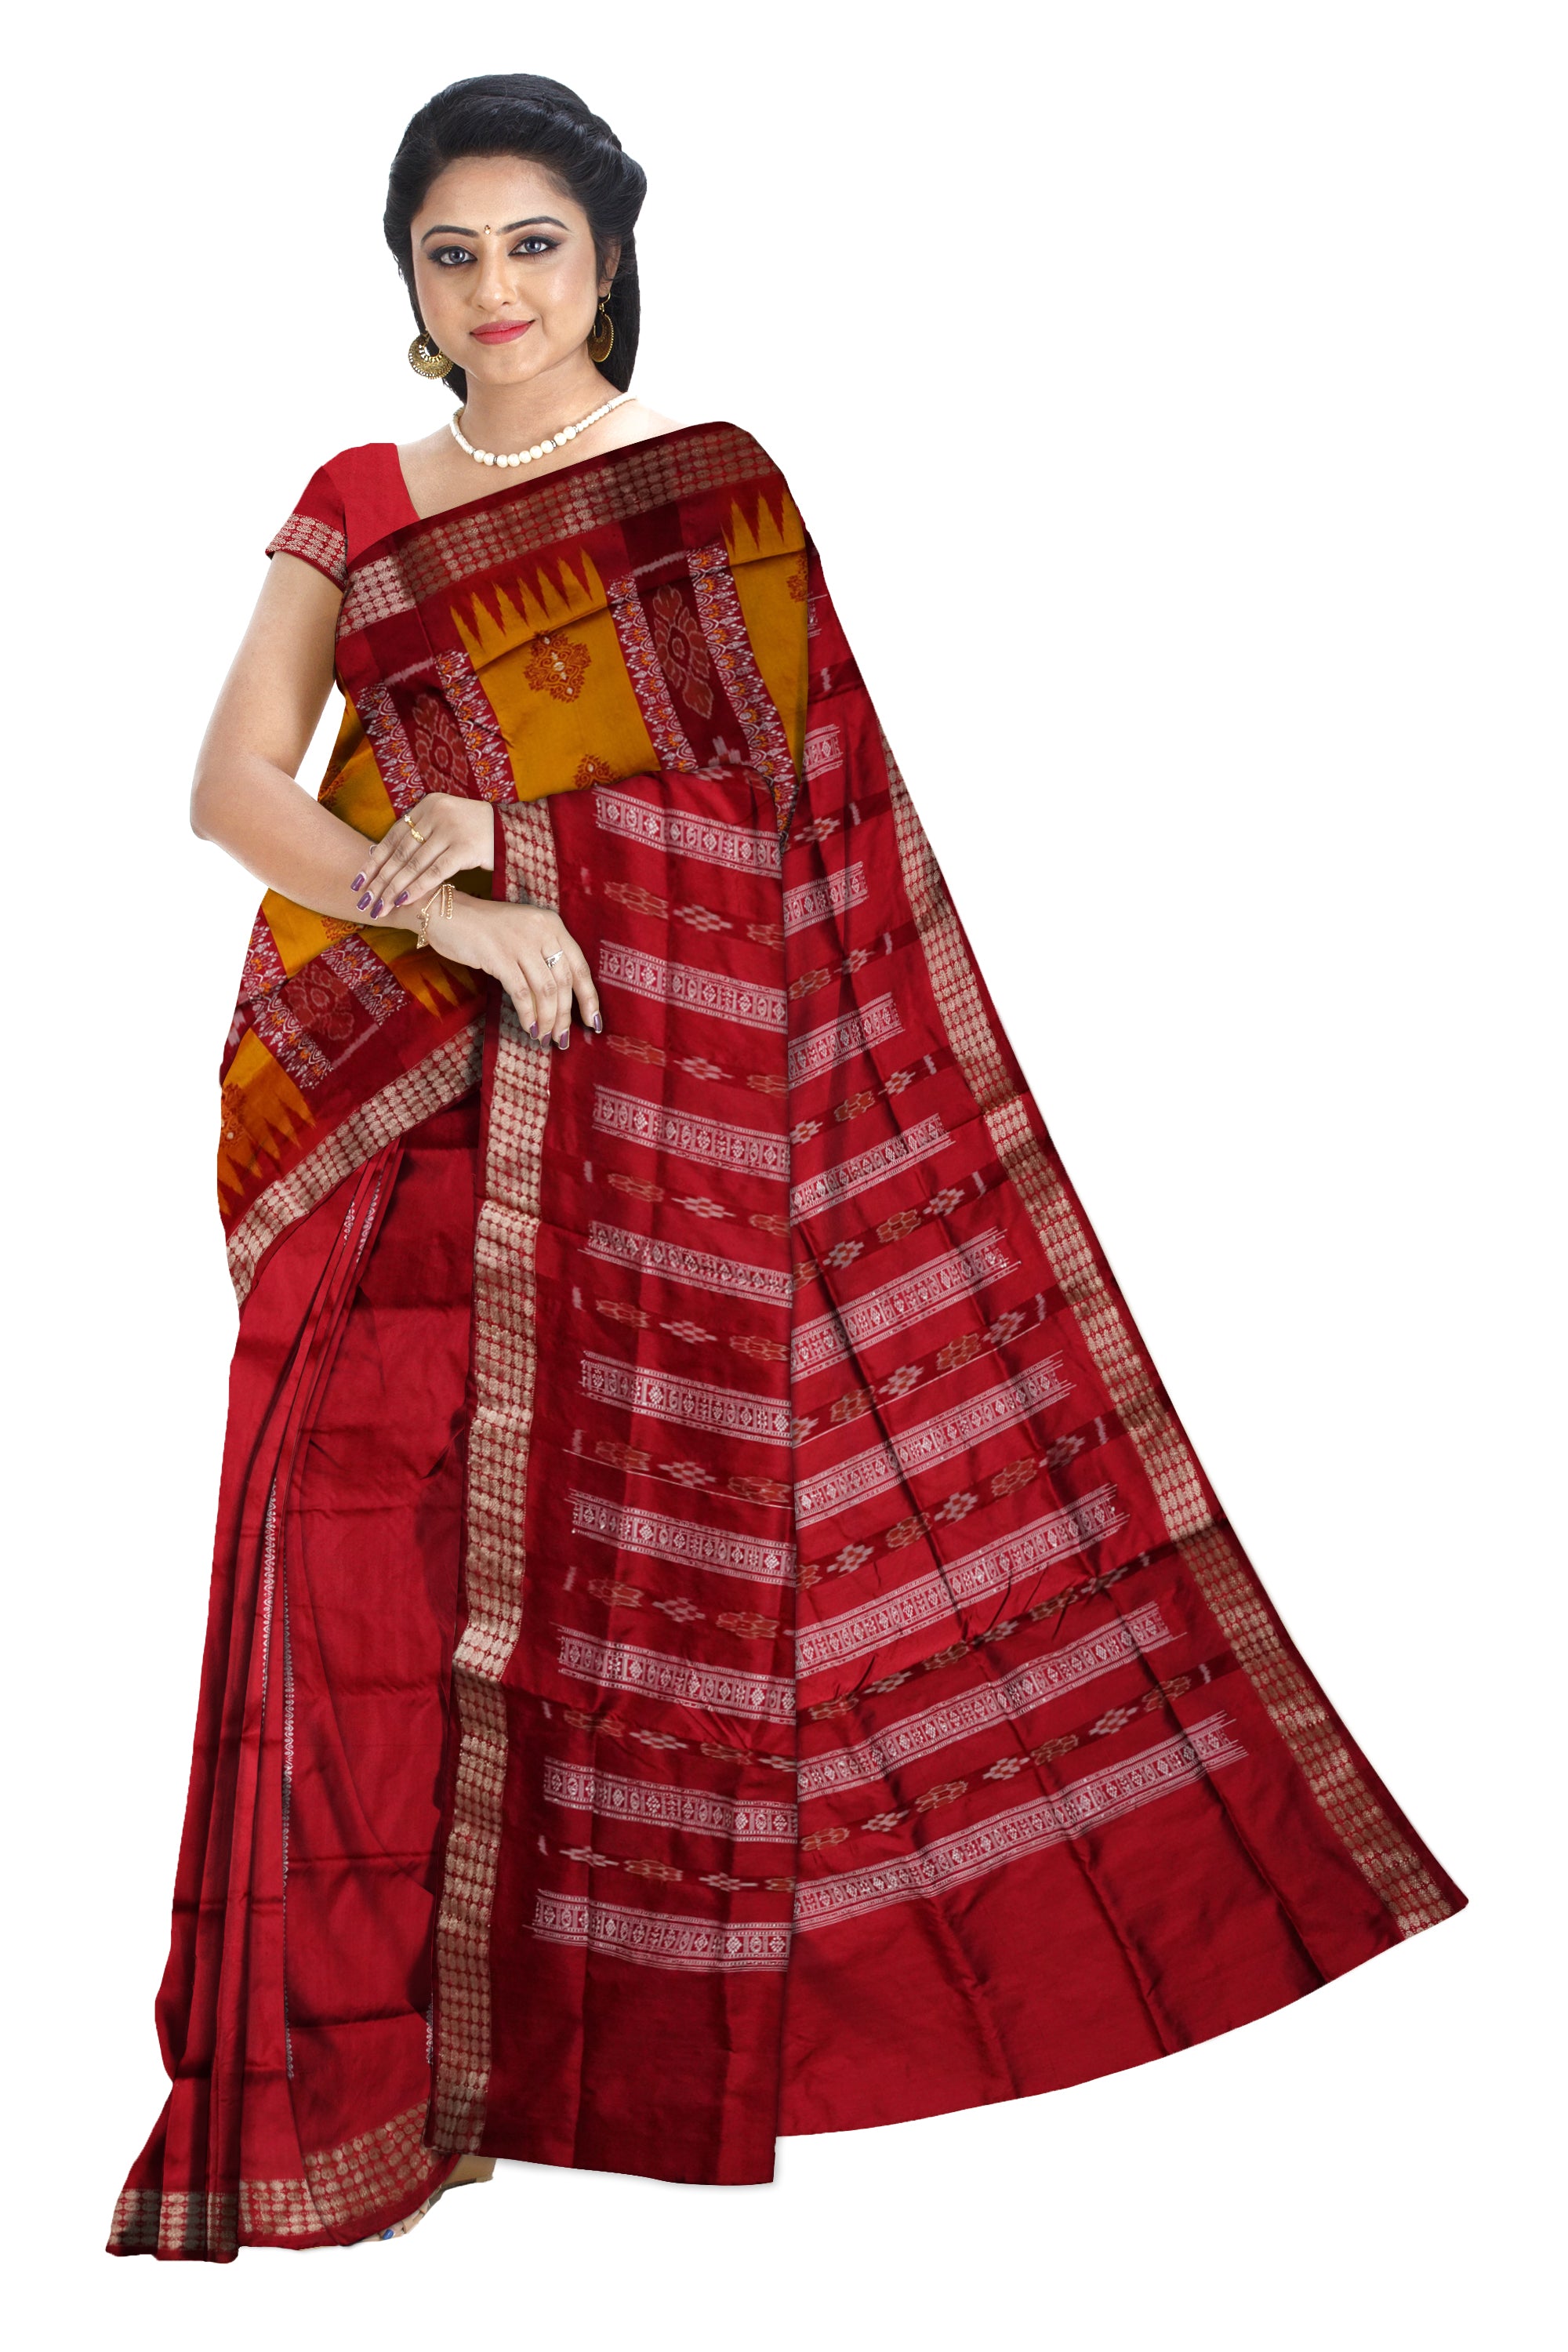 Sambalpuri patli design pata saree is Yellow & Maroon color base. - Koshali Arts & Crafts Enterprise